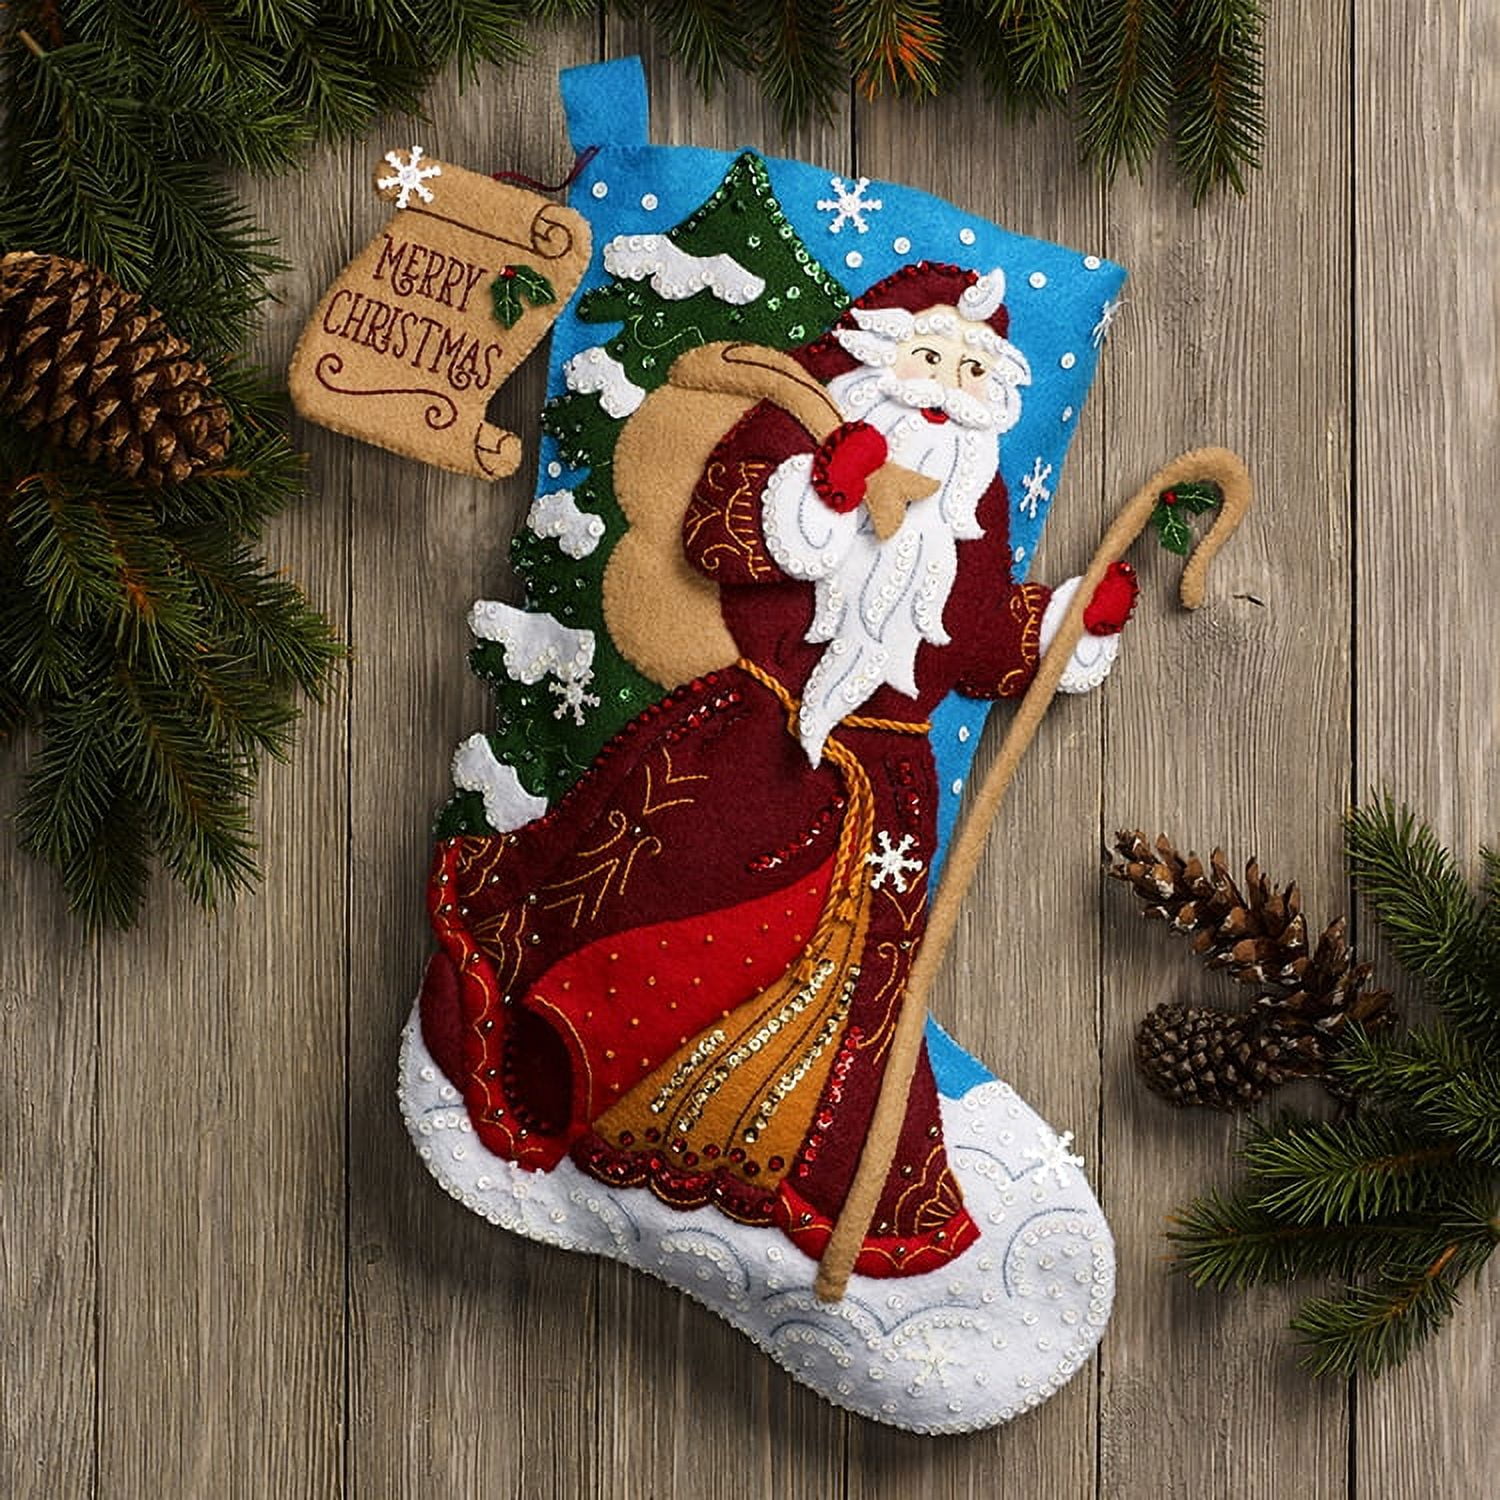 Bucilla 18-inch Christmas Stocking Felt Applique Kit 86105 Coolin It